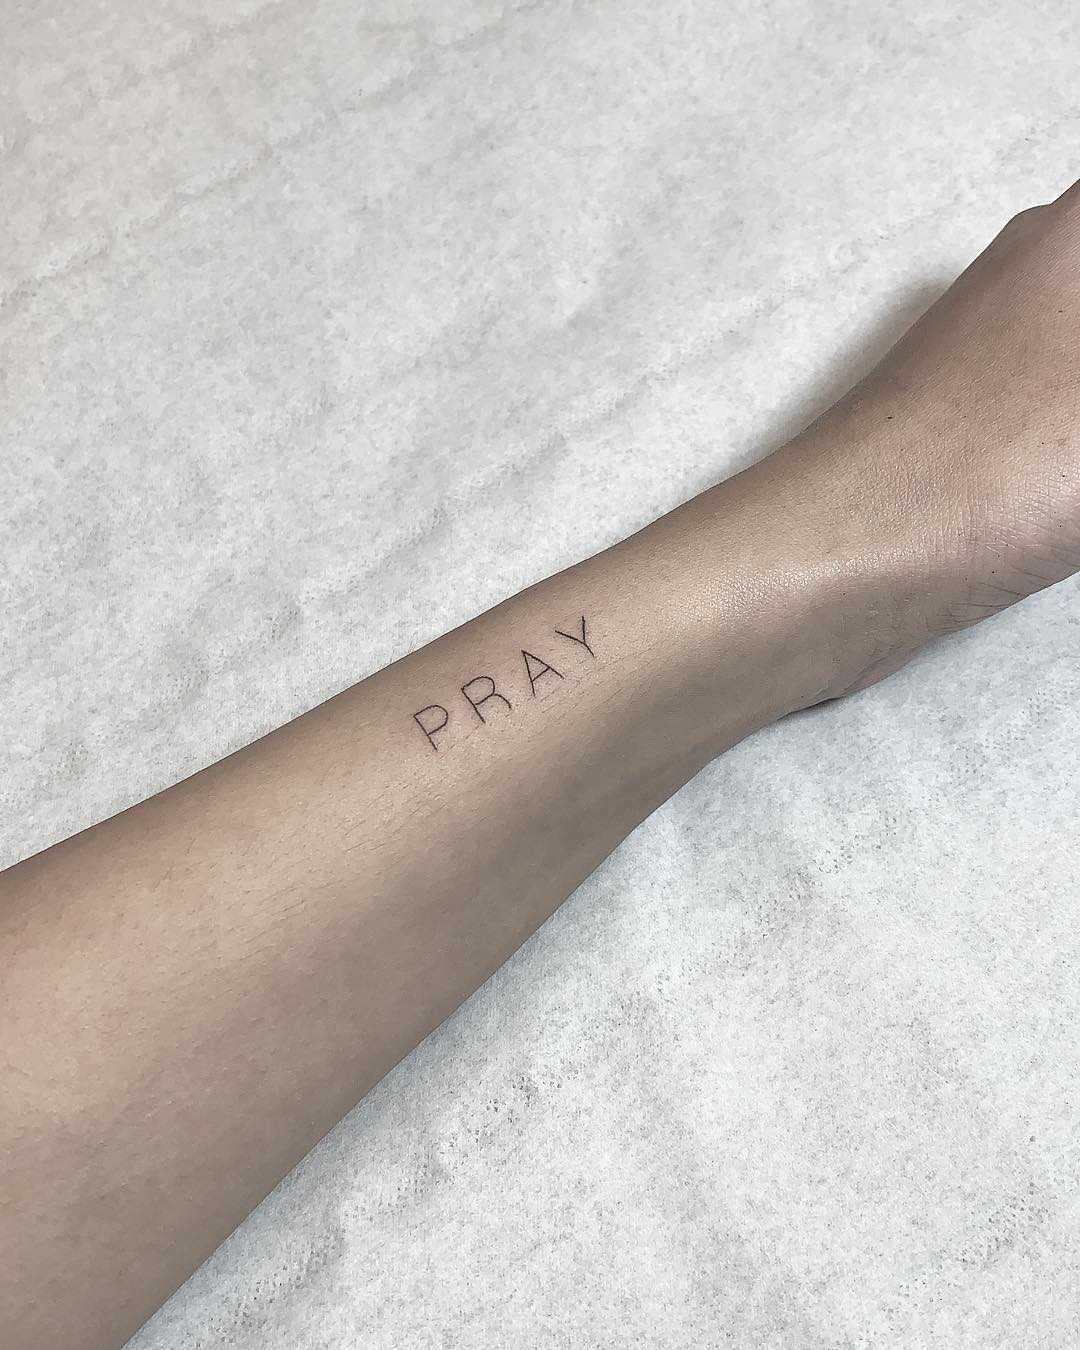 Pray tattoo by Conz Thomas